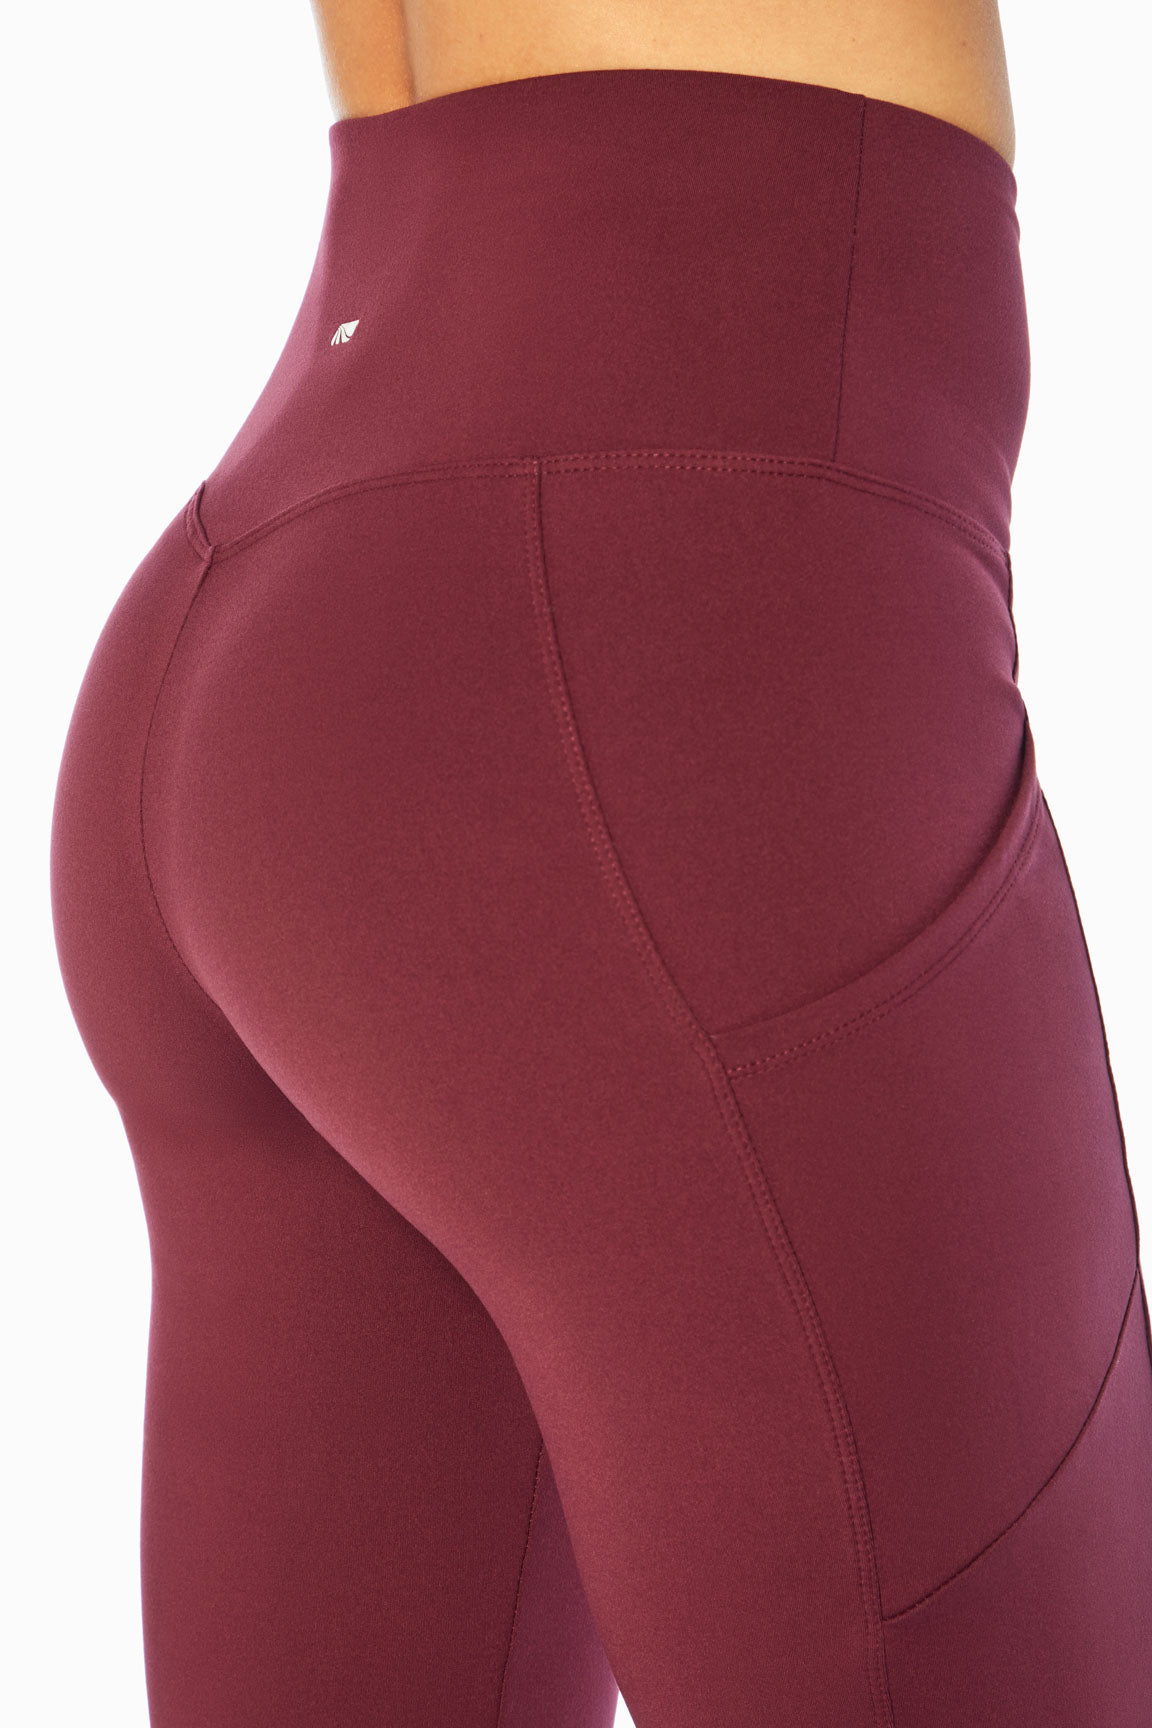 Eclipse Side Pocket Tummy Control Yoga Pant – Marika